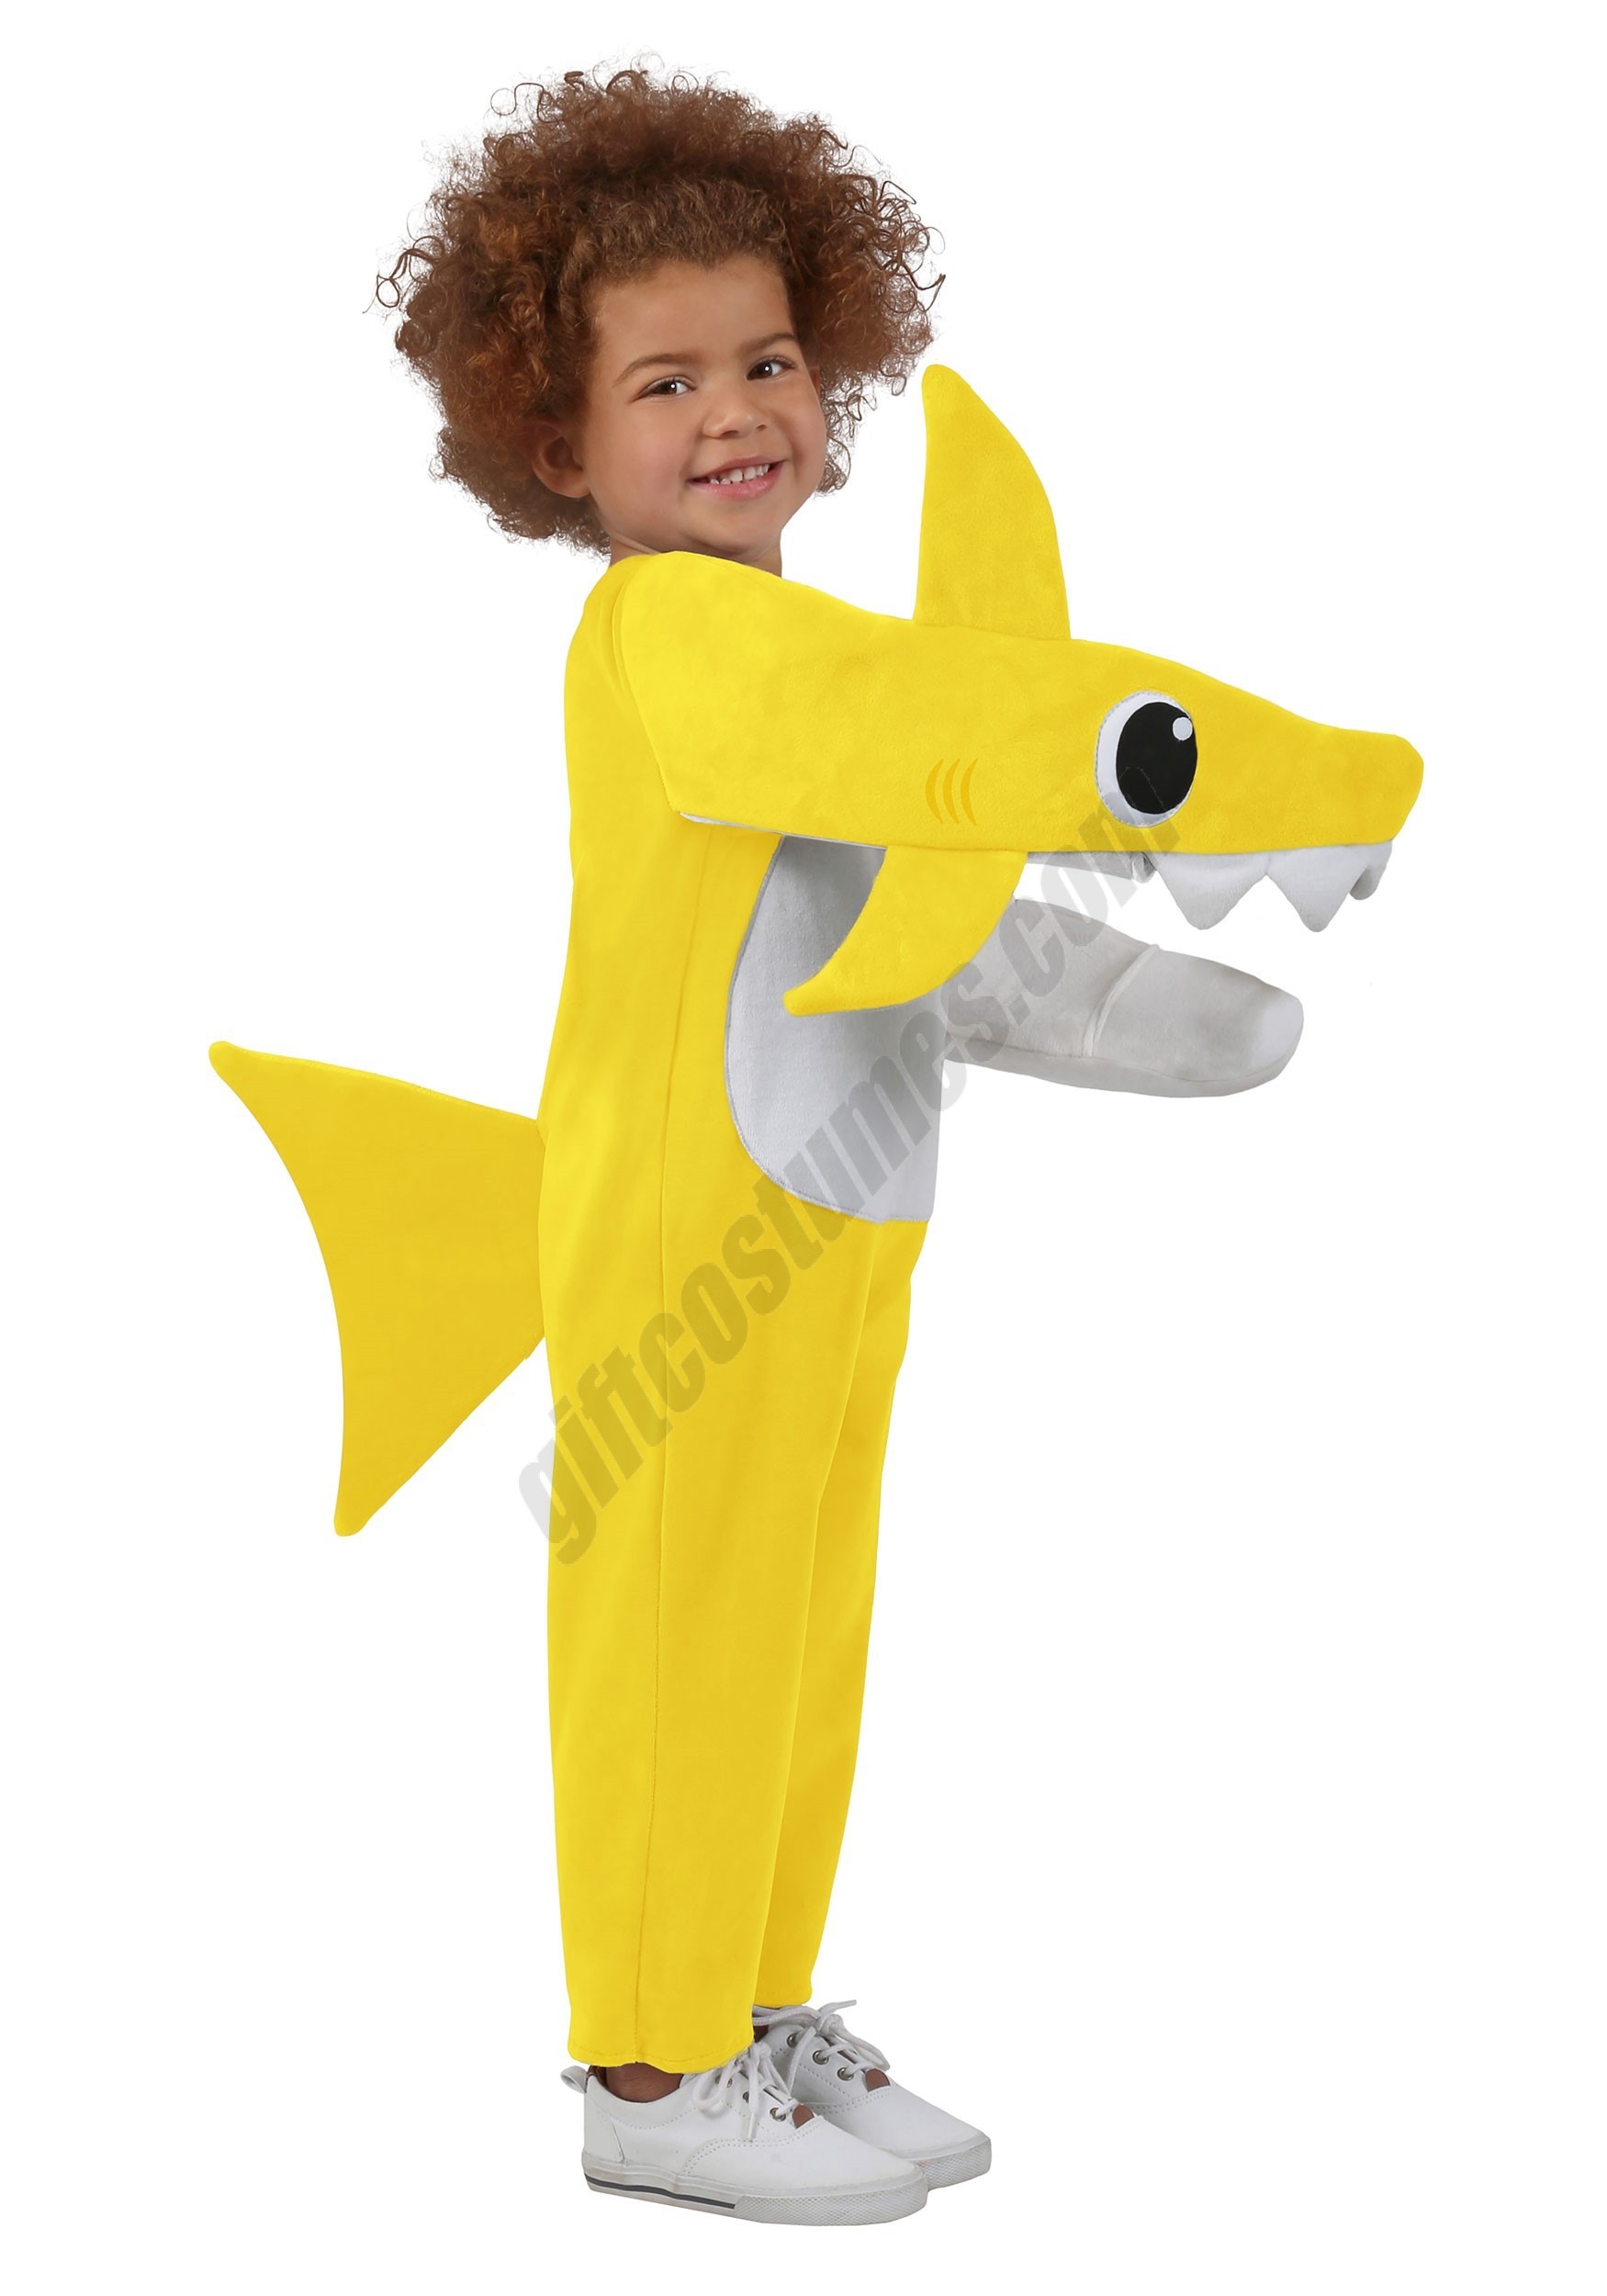 Baby Shark Kids Costume Promotions - Baby Shark Kids Costume Promotions